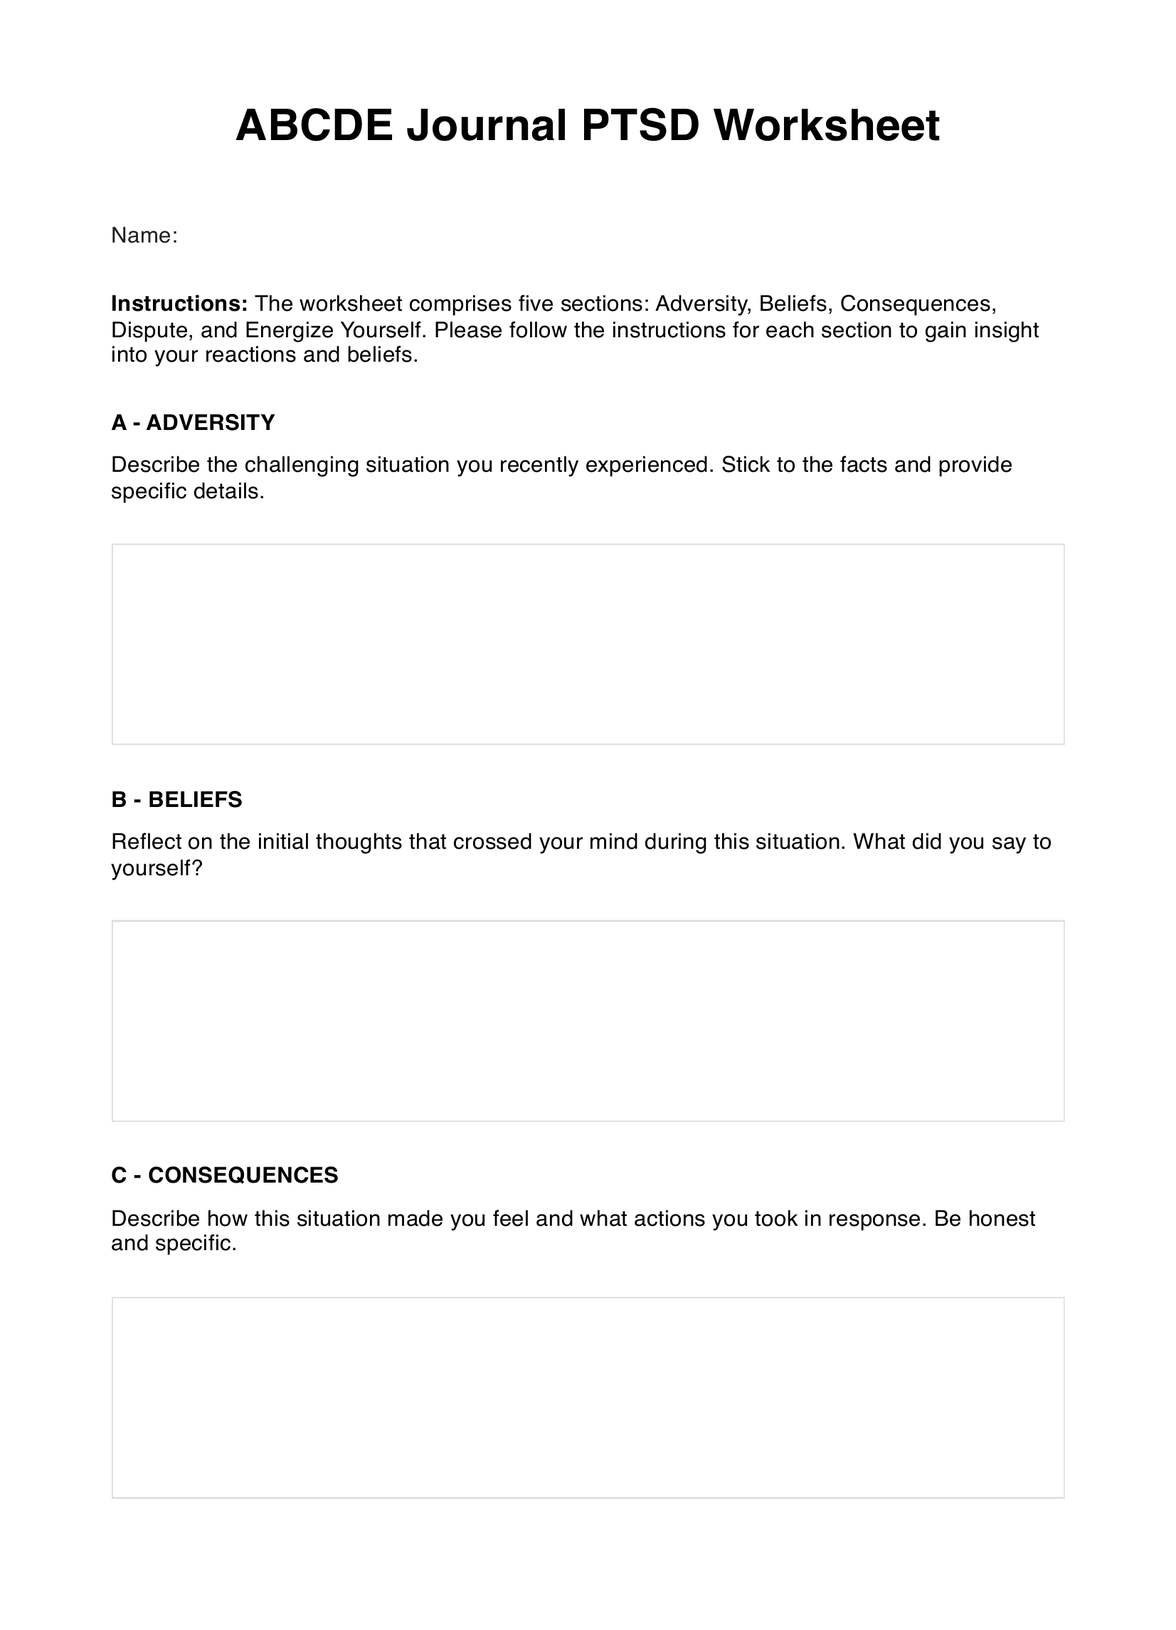 ABCDE Journal PTSD Worksheet PDF Example